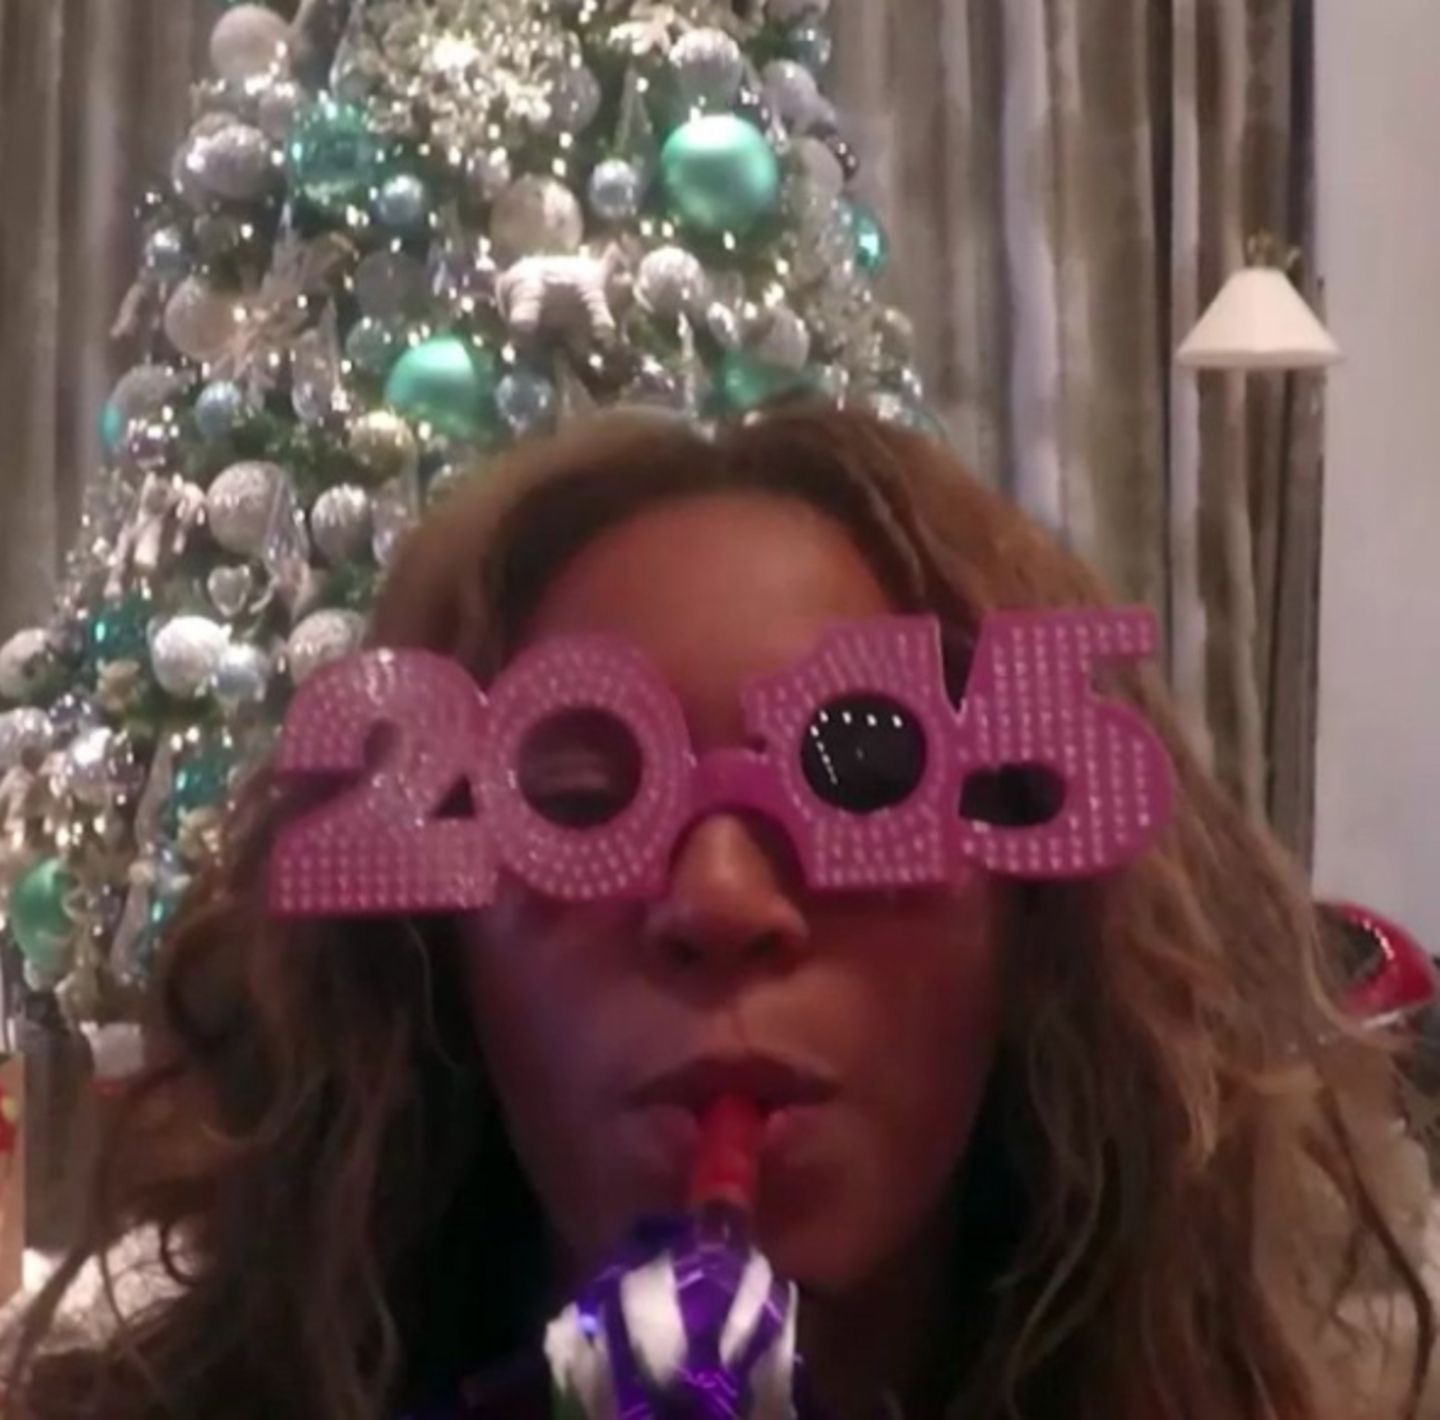 "Happy new year!" Auch Beyoncé teilt Neujahrsgrüße.